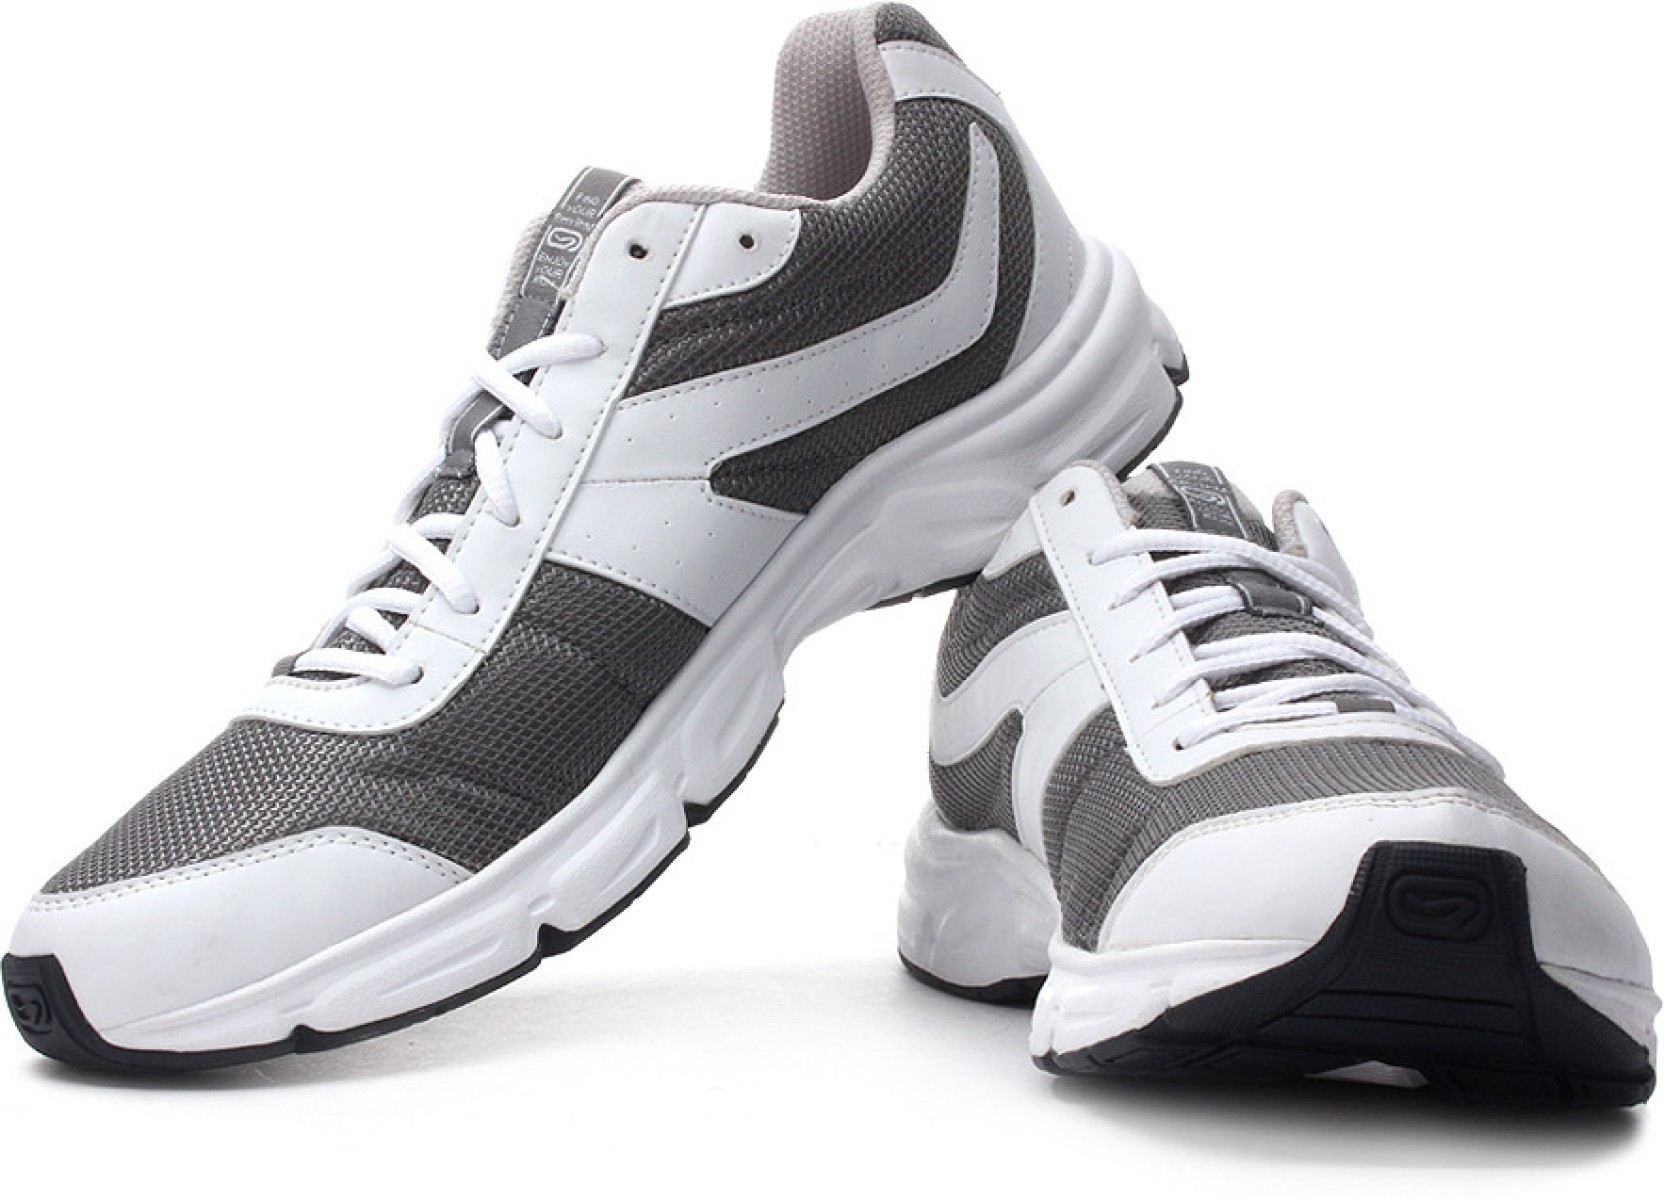 Kalenji by Decathlon Ekiden 50 Running Shoes - Buy Grey Color Kalenji ...